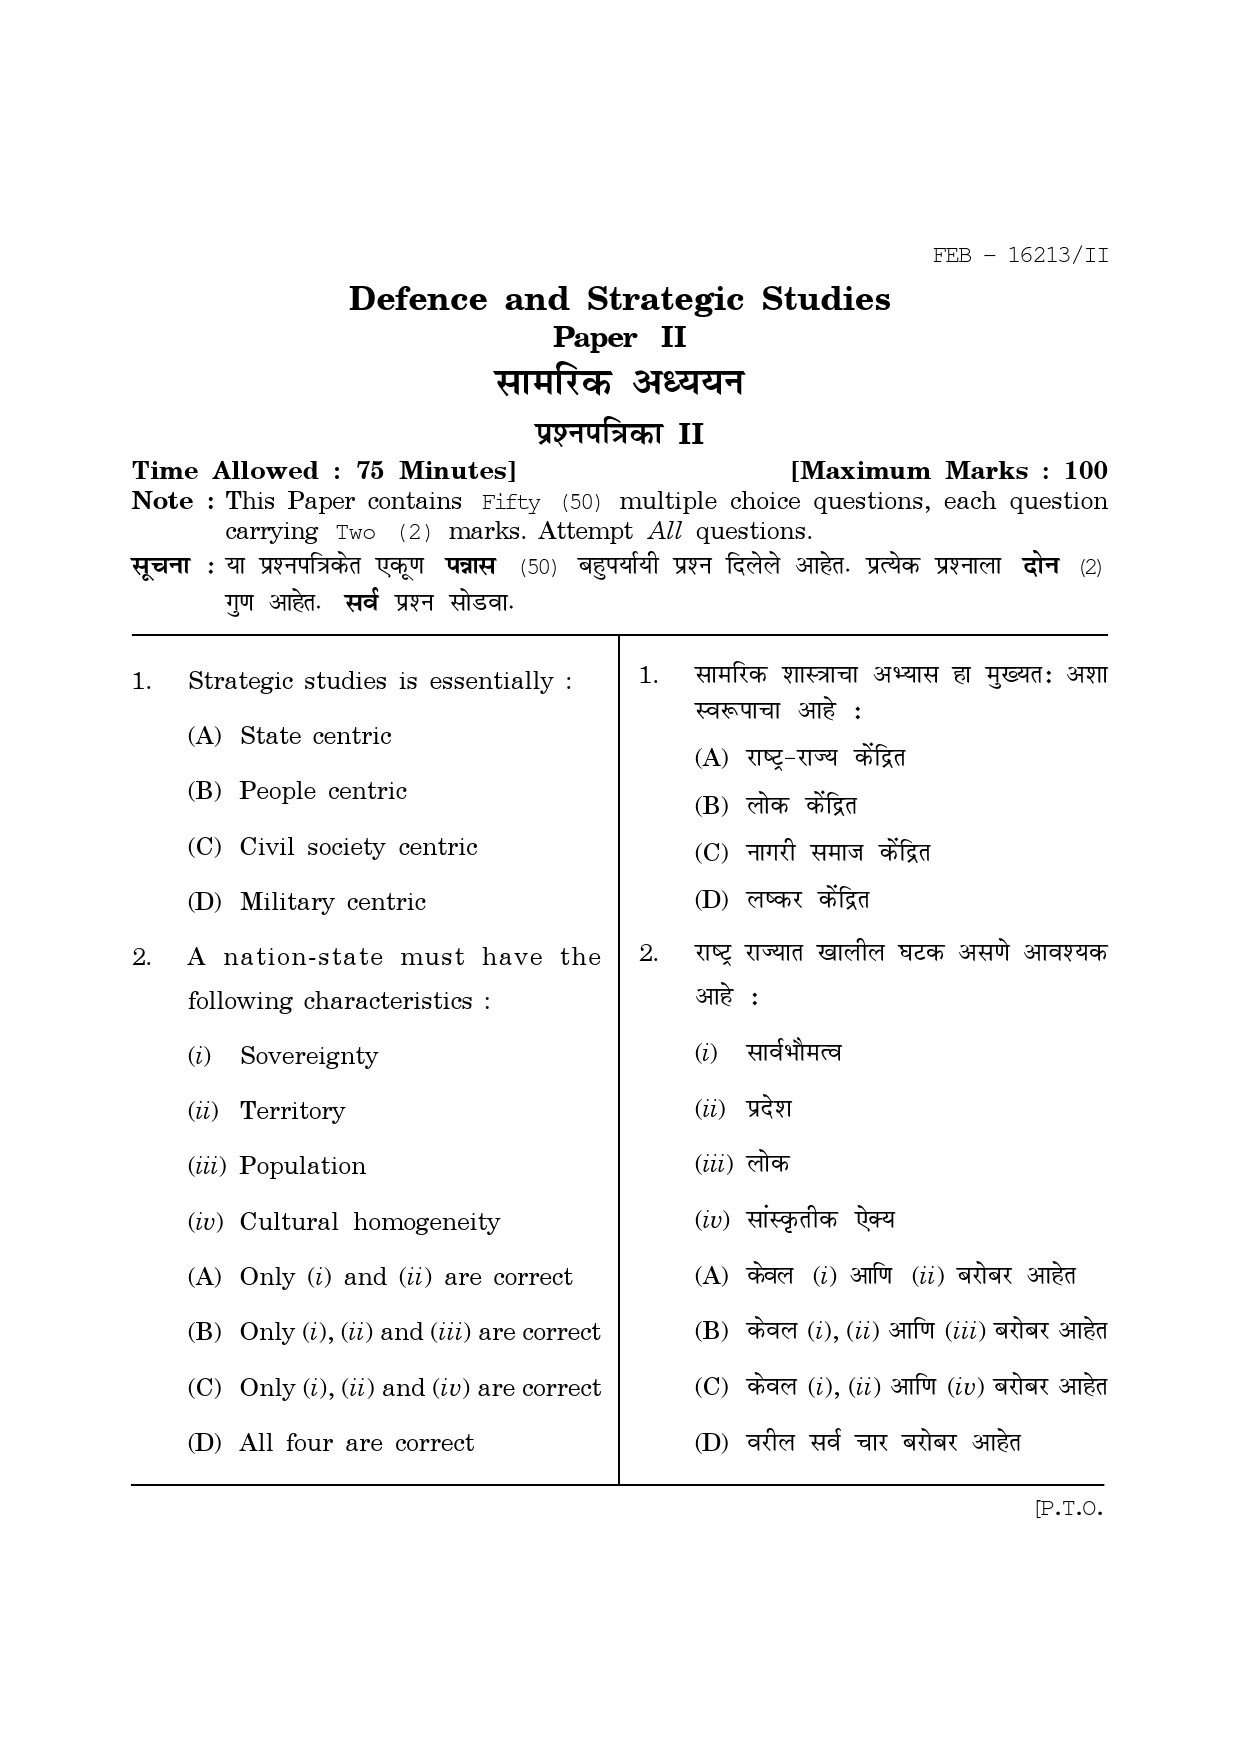 Maharashtra SET Defence and Strategic Studies Question Paper II February 2013 1